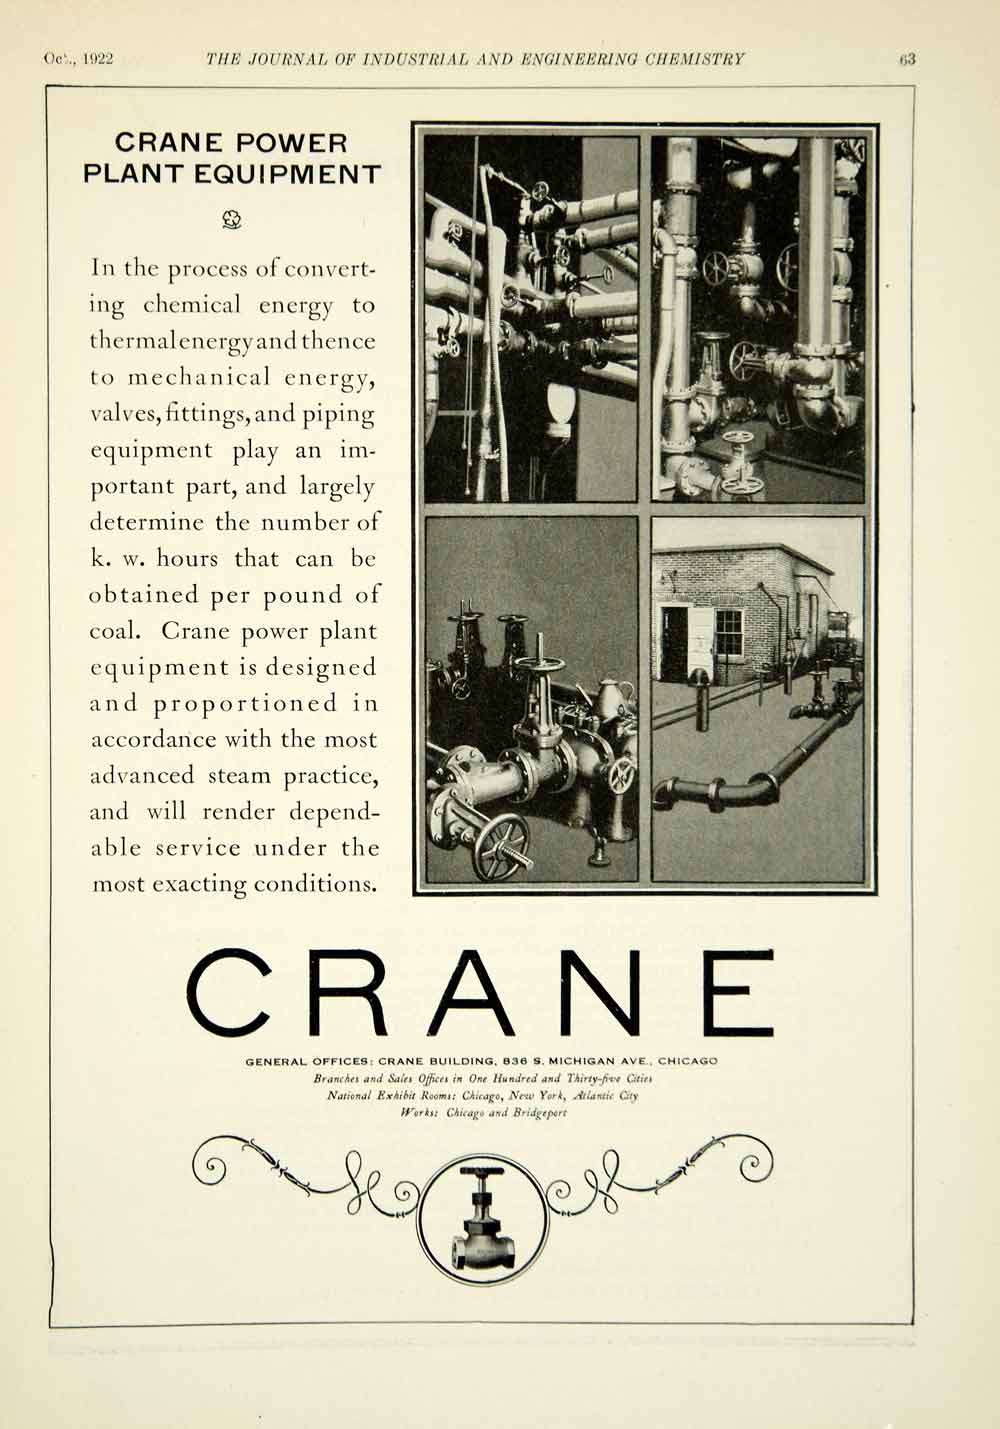 1922 Ad Crane Power Plant Equipment Valve Pipe Fitting Plumbing Factory IEC2